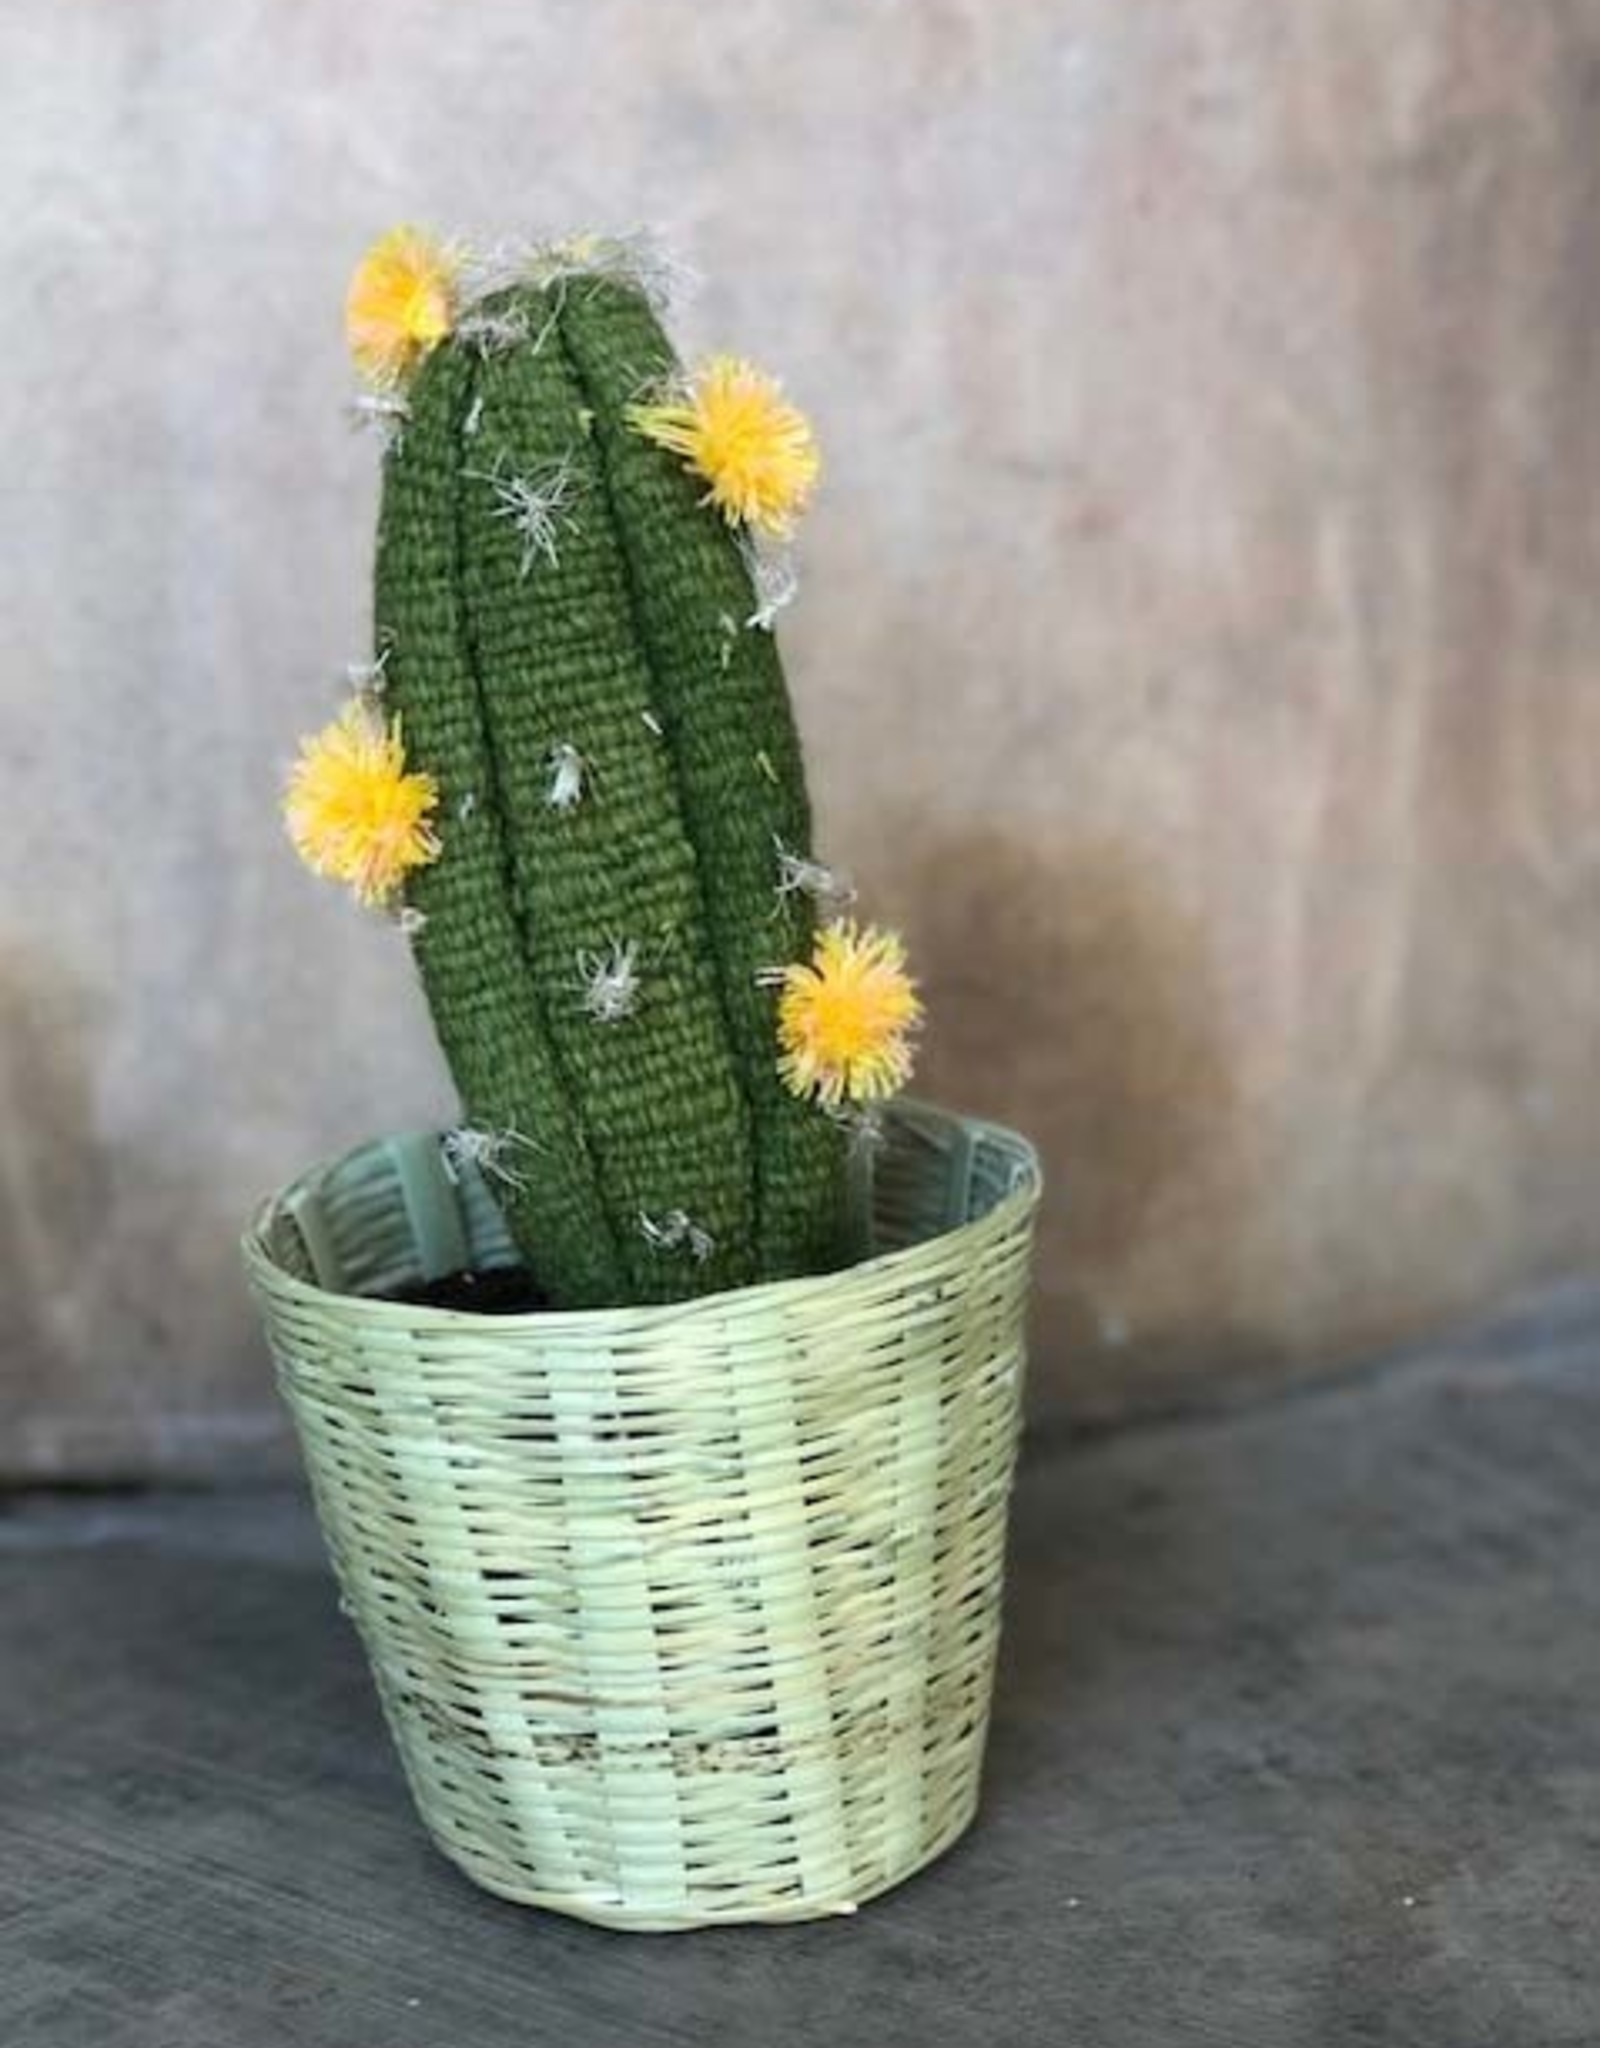 Medium Green Yellow Cactus